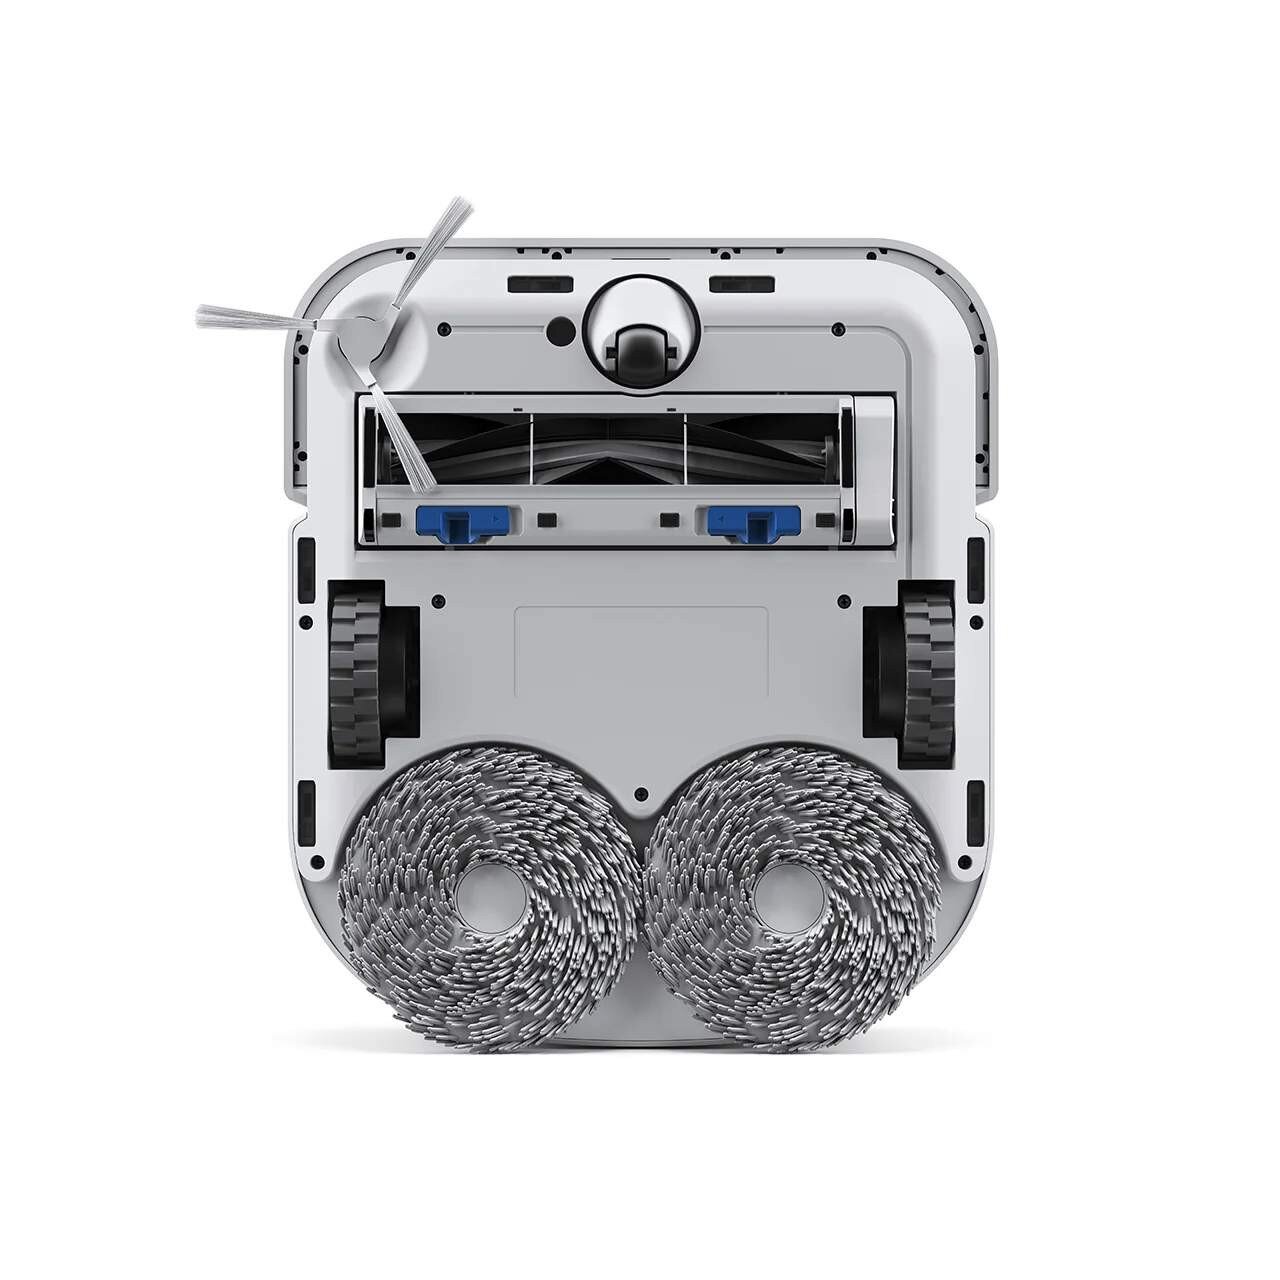 Buy ECOVACS DEEBOT X2 OMNI Robot Vacuum Cleaner online Worldwide